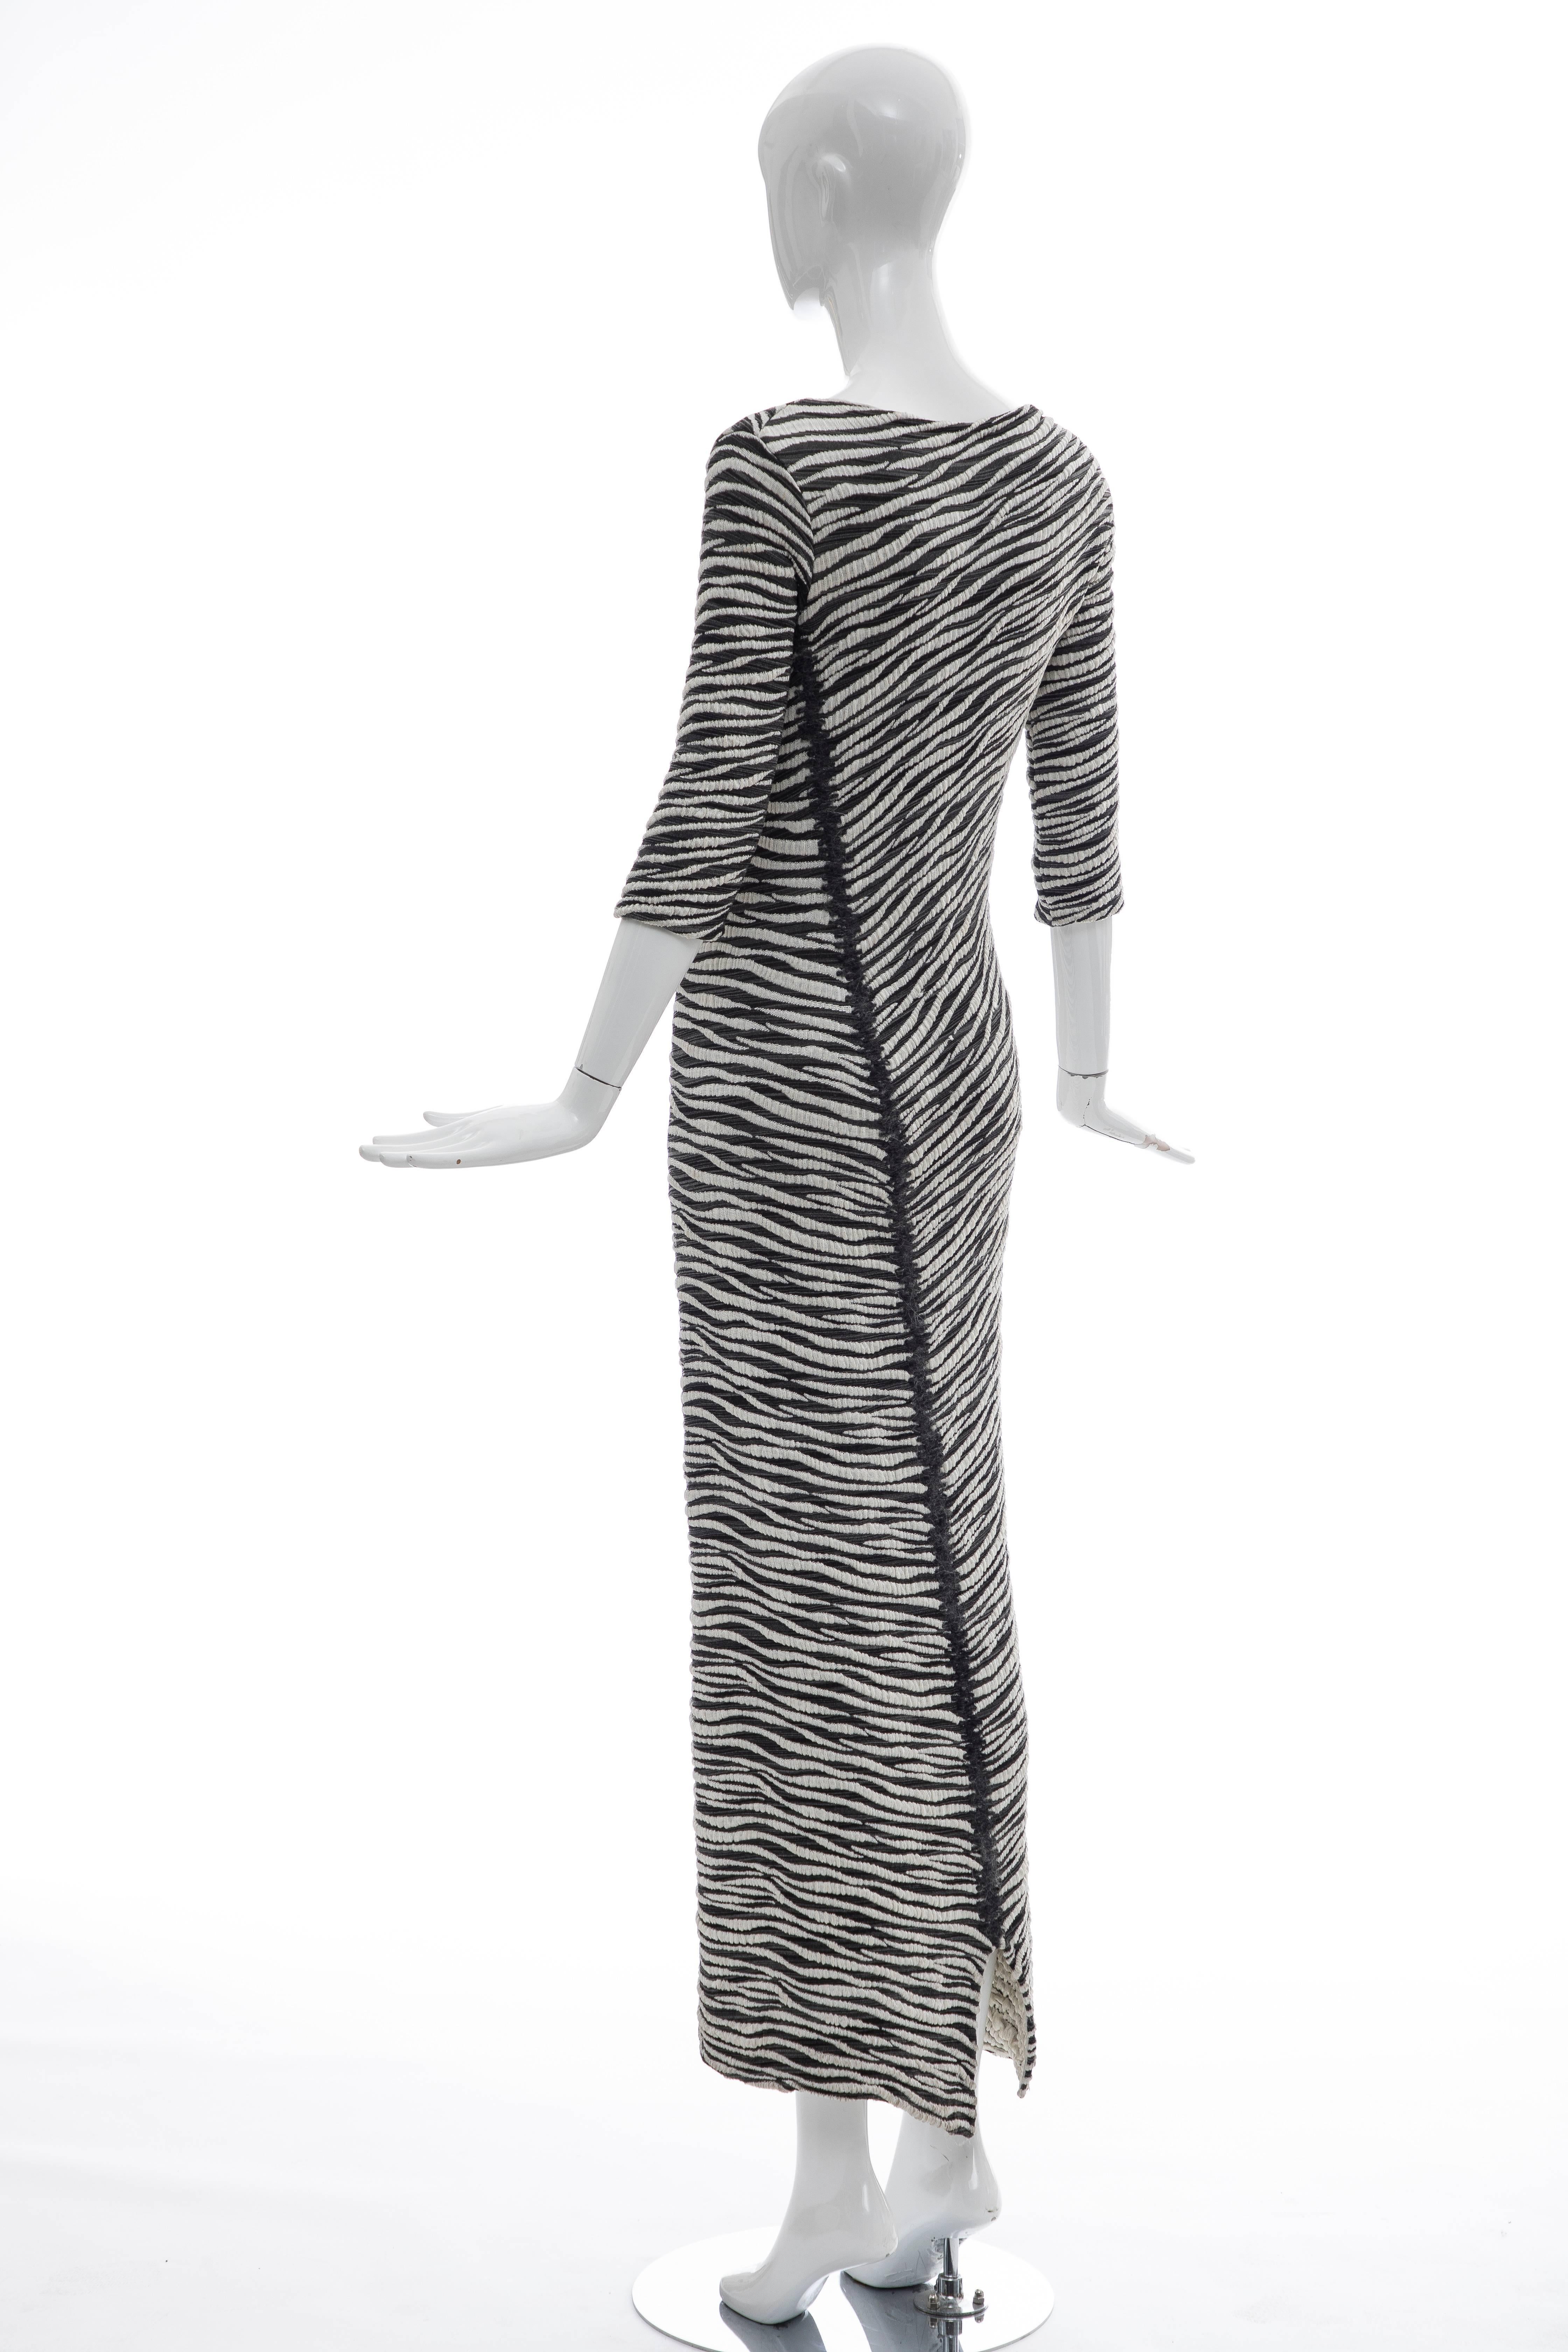 Gianfranco Ferre Long Sleeve Stretch Knit Dress, Circa 1990's For Sale 2